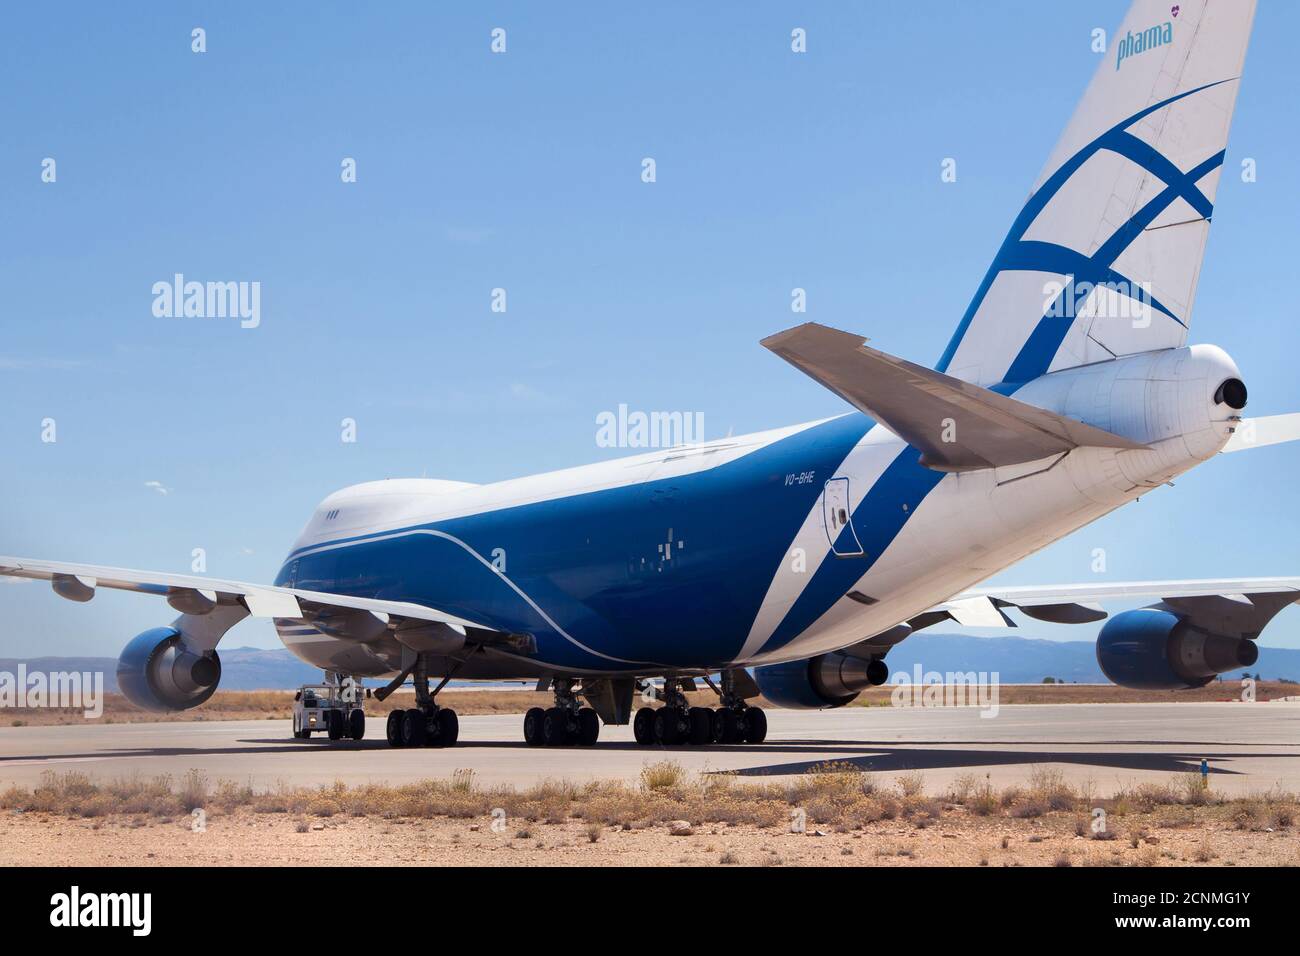 Teruel, Spain - August 17, 2020: Air Bridge Cargo Boeing 747-400 stored at Teruel Airport, Spain. Stock Photo